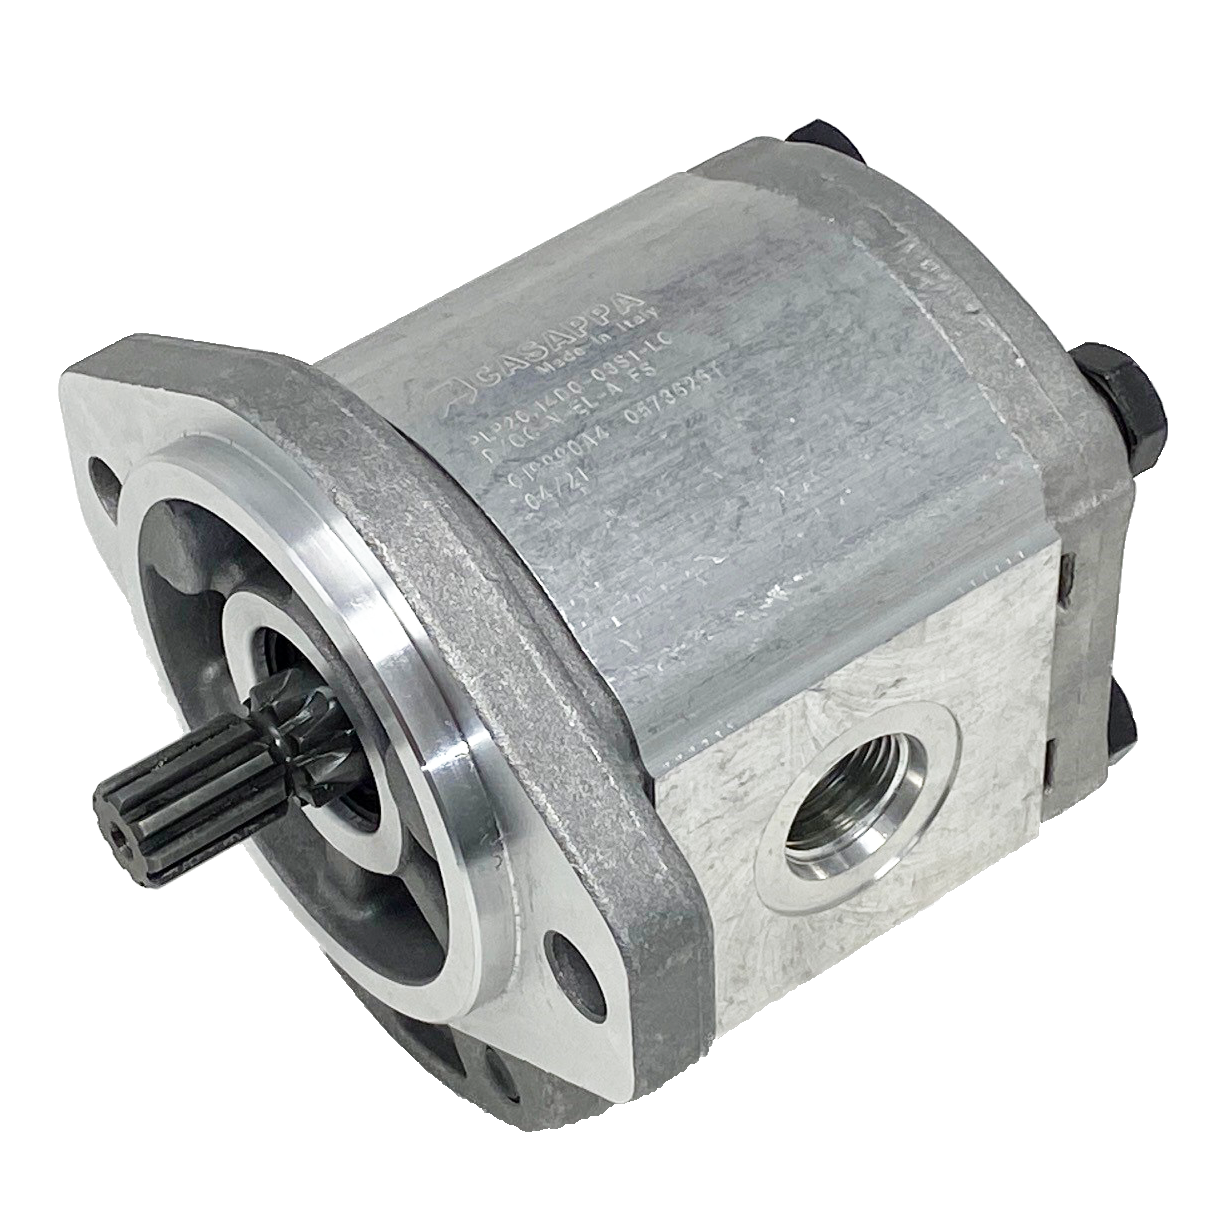 PLM20.20R0-03S1-LOC/OD-N-EL : Casappa Polaris Gear Motor, 21.14cc, 2900psi Rated, 3000RPM, Reversible Rear External Drain, 9T 16/32dp Shaft, SAE A 2-Bolt Flange, 0.625 (5/8") #10 SAE Inlet, 0.75 (3/4") #12 SAE Outlet, Aluminum Body & Flange